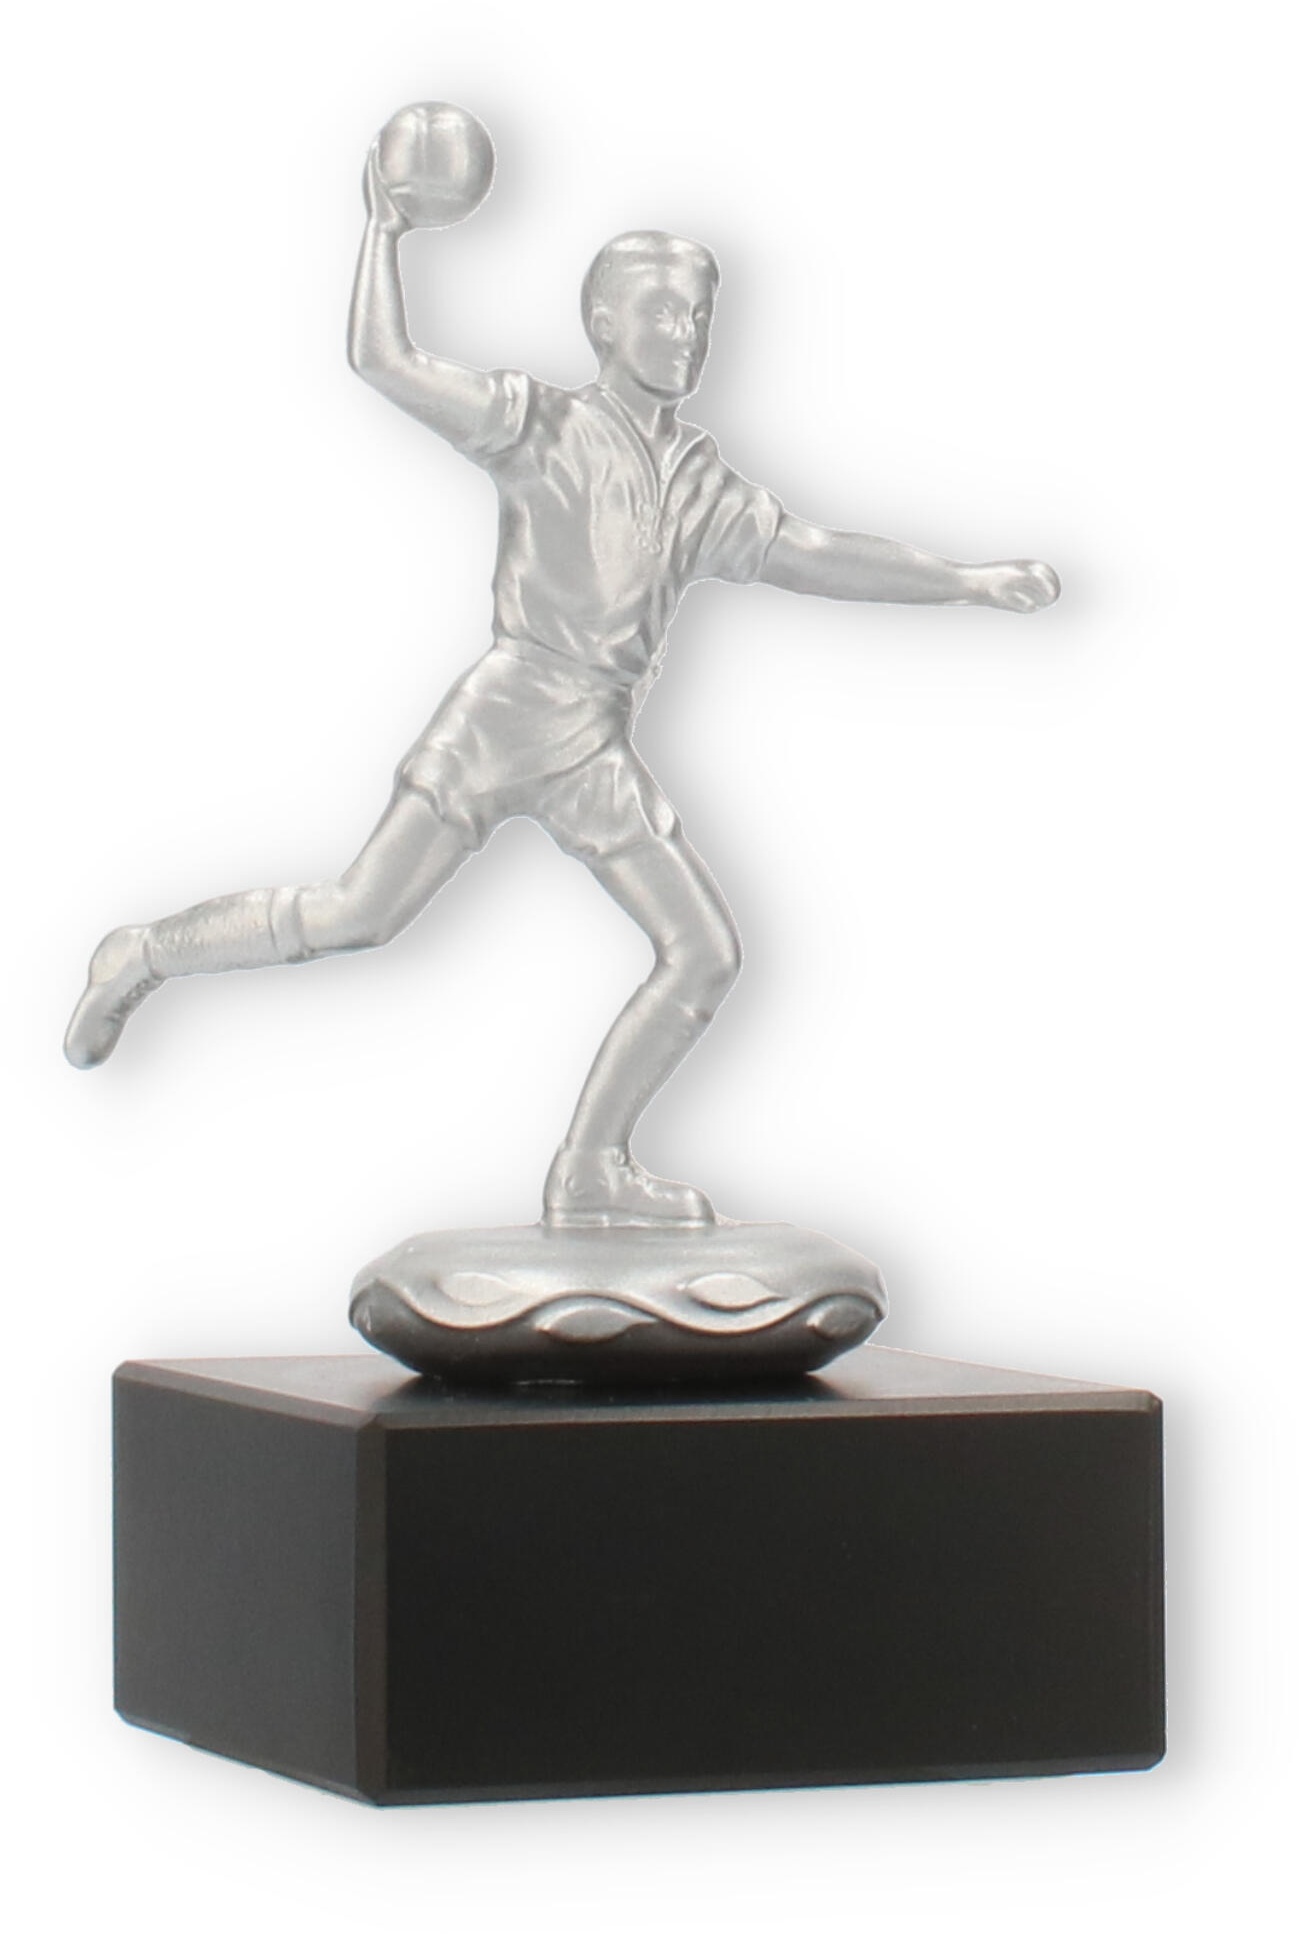 Pokal Metallfigur Handballspieler silbermetallic auf schwarzem Marmorsockel 12,0cm